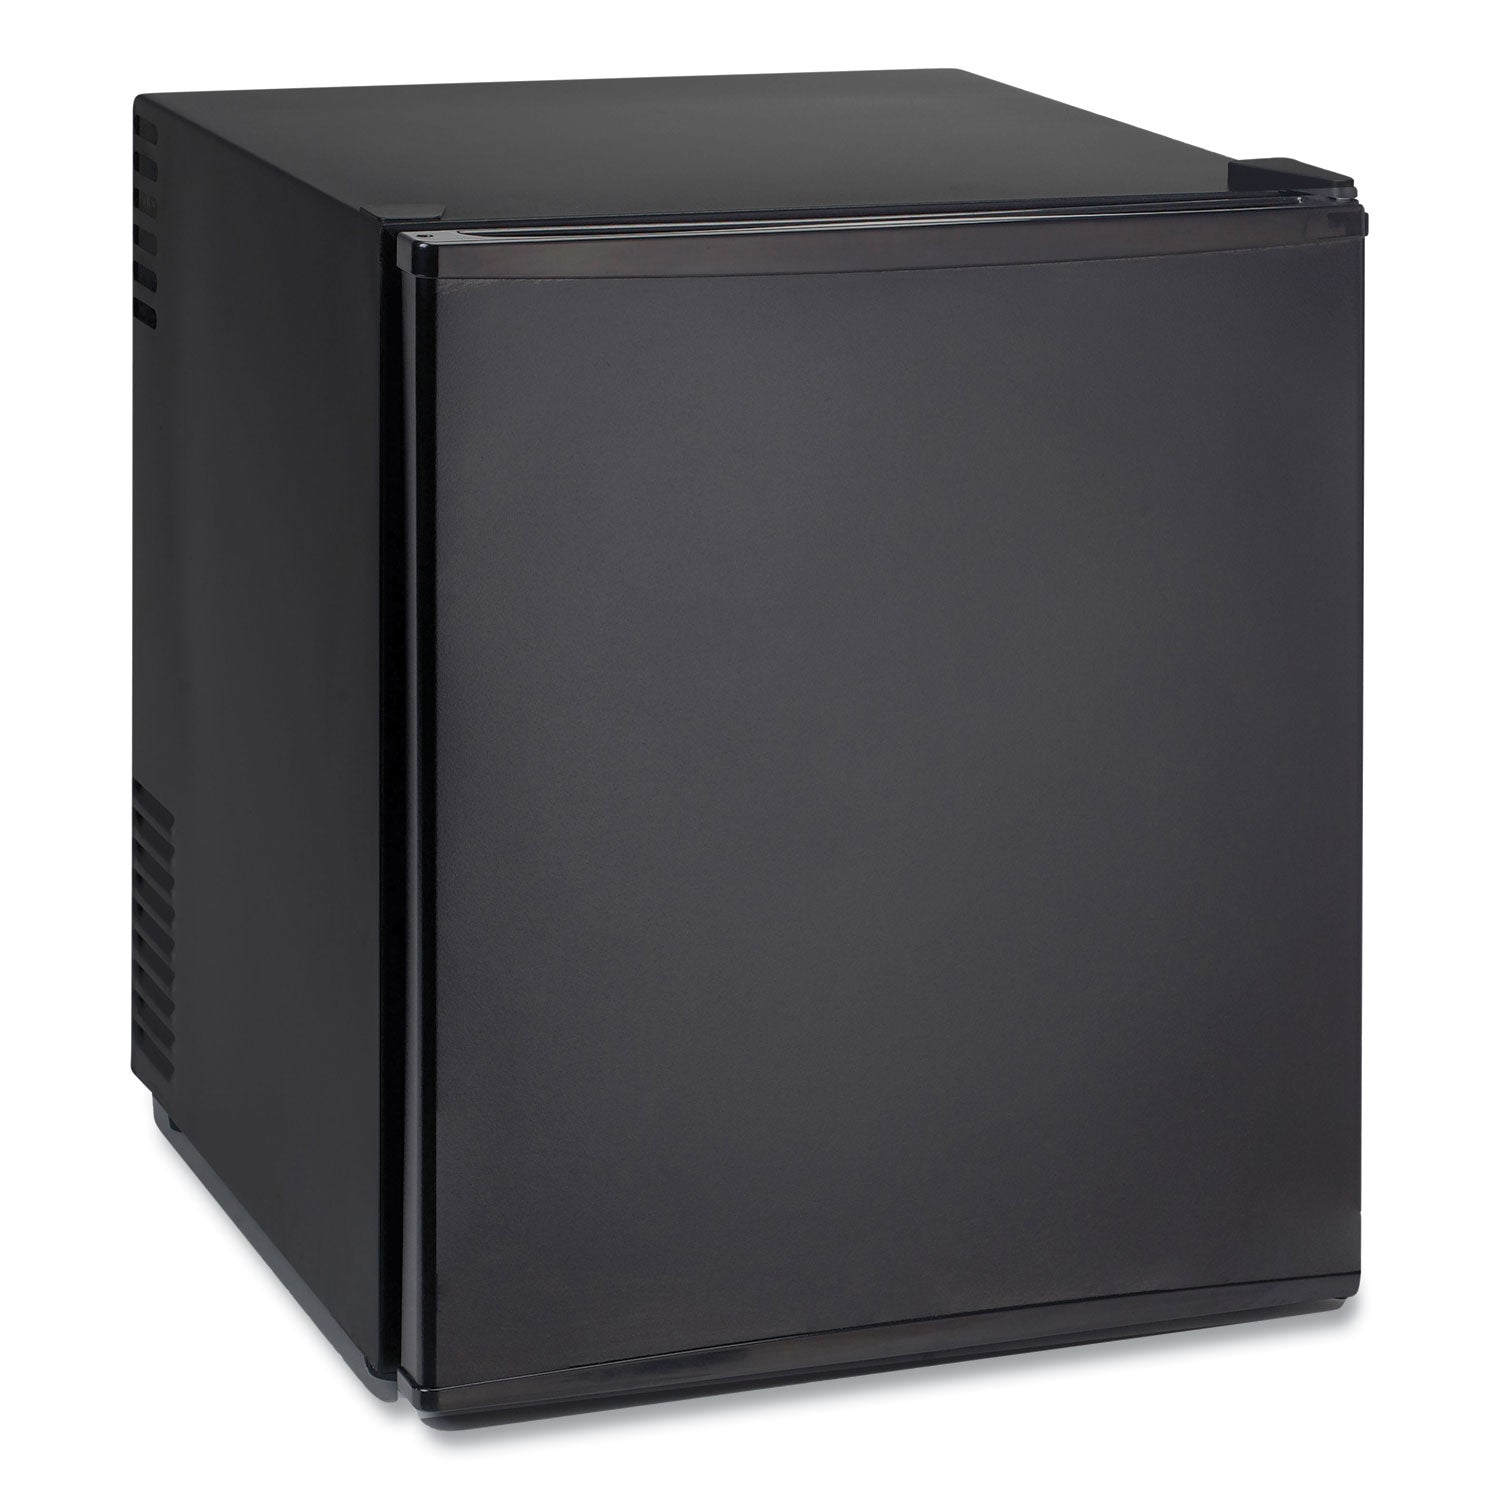 1.7 Cu.Ft Superconductor Compact Refrigerator, Black Flipcost Flipcost